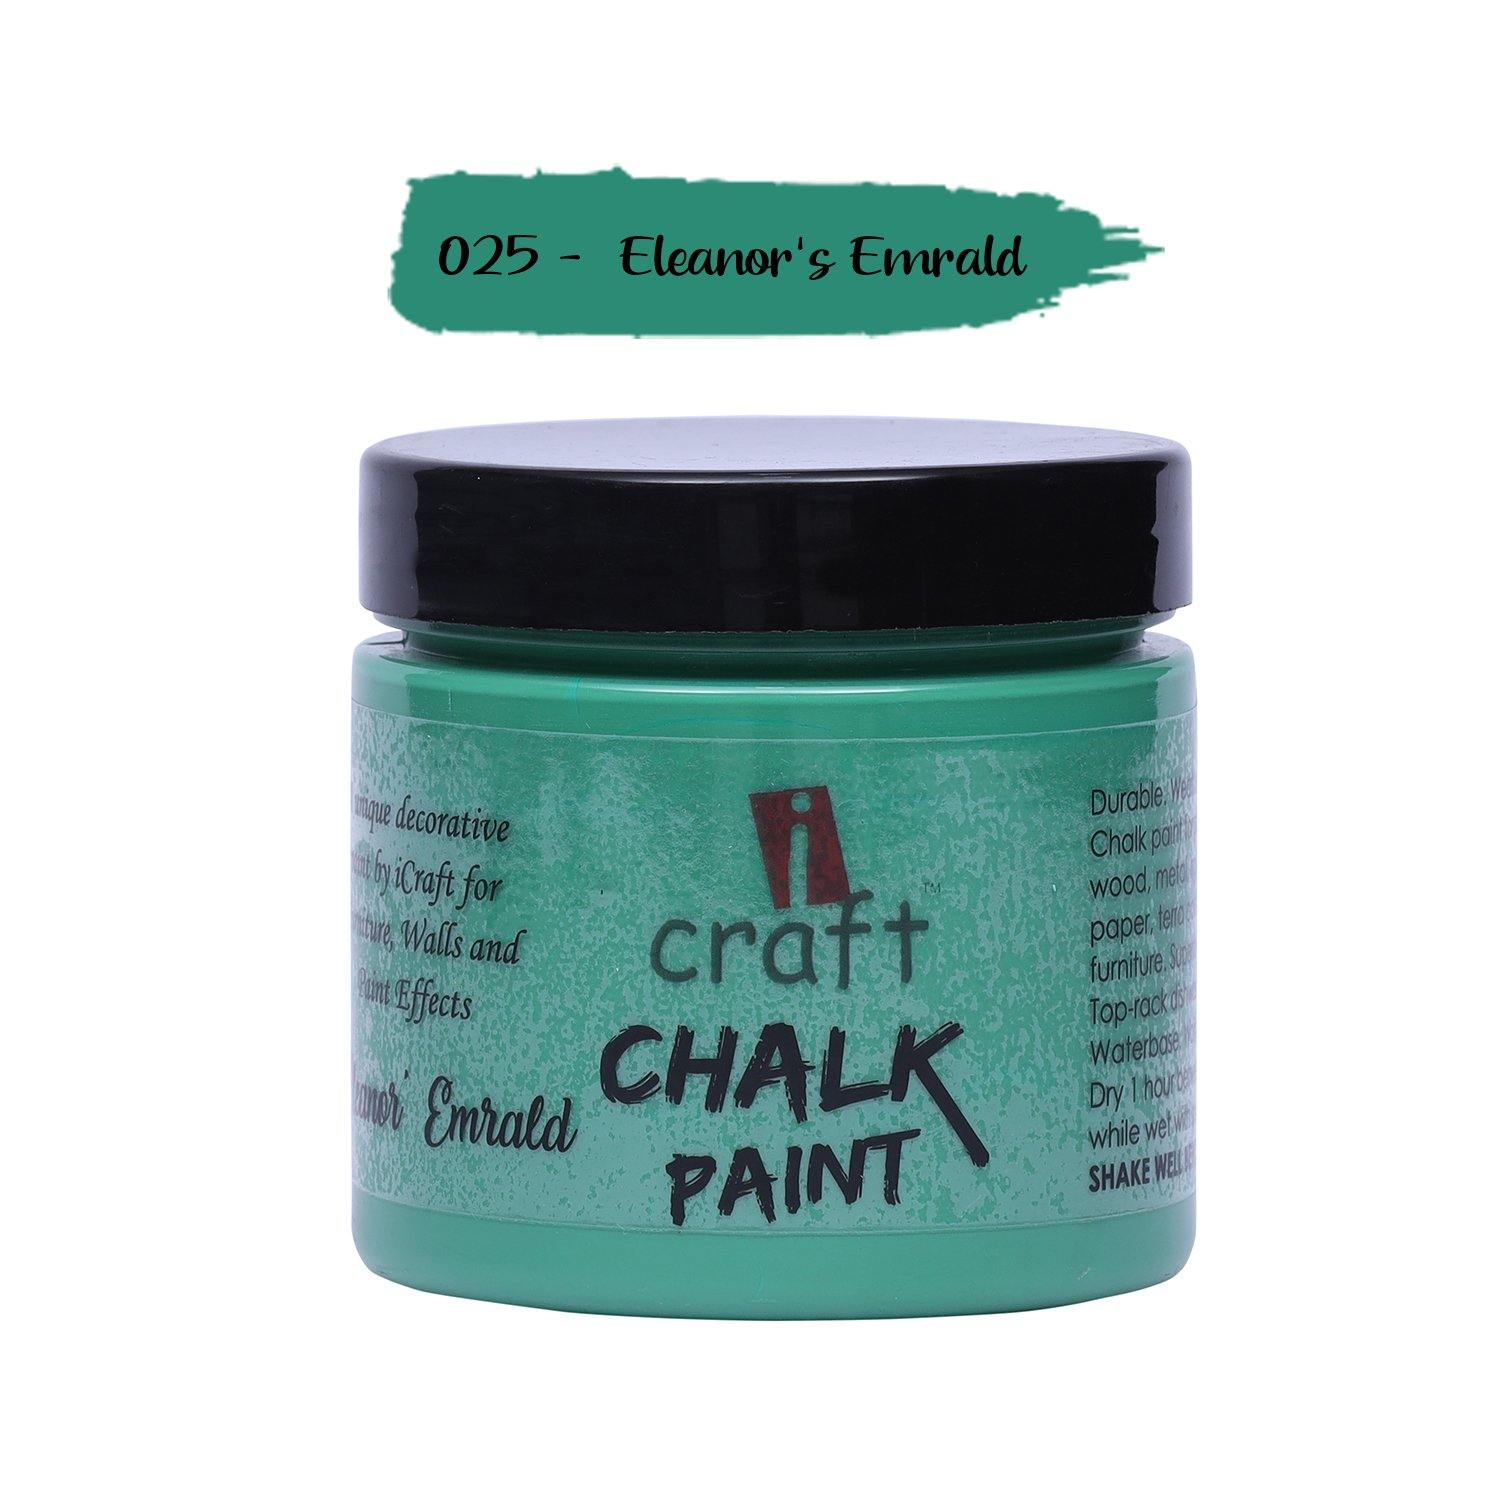 Chalk Paint - 25 (Eleanor's Emrabd) - Growing Craft - Best craft Supplies